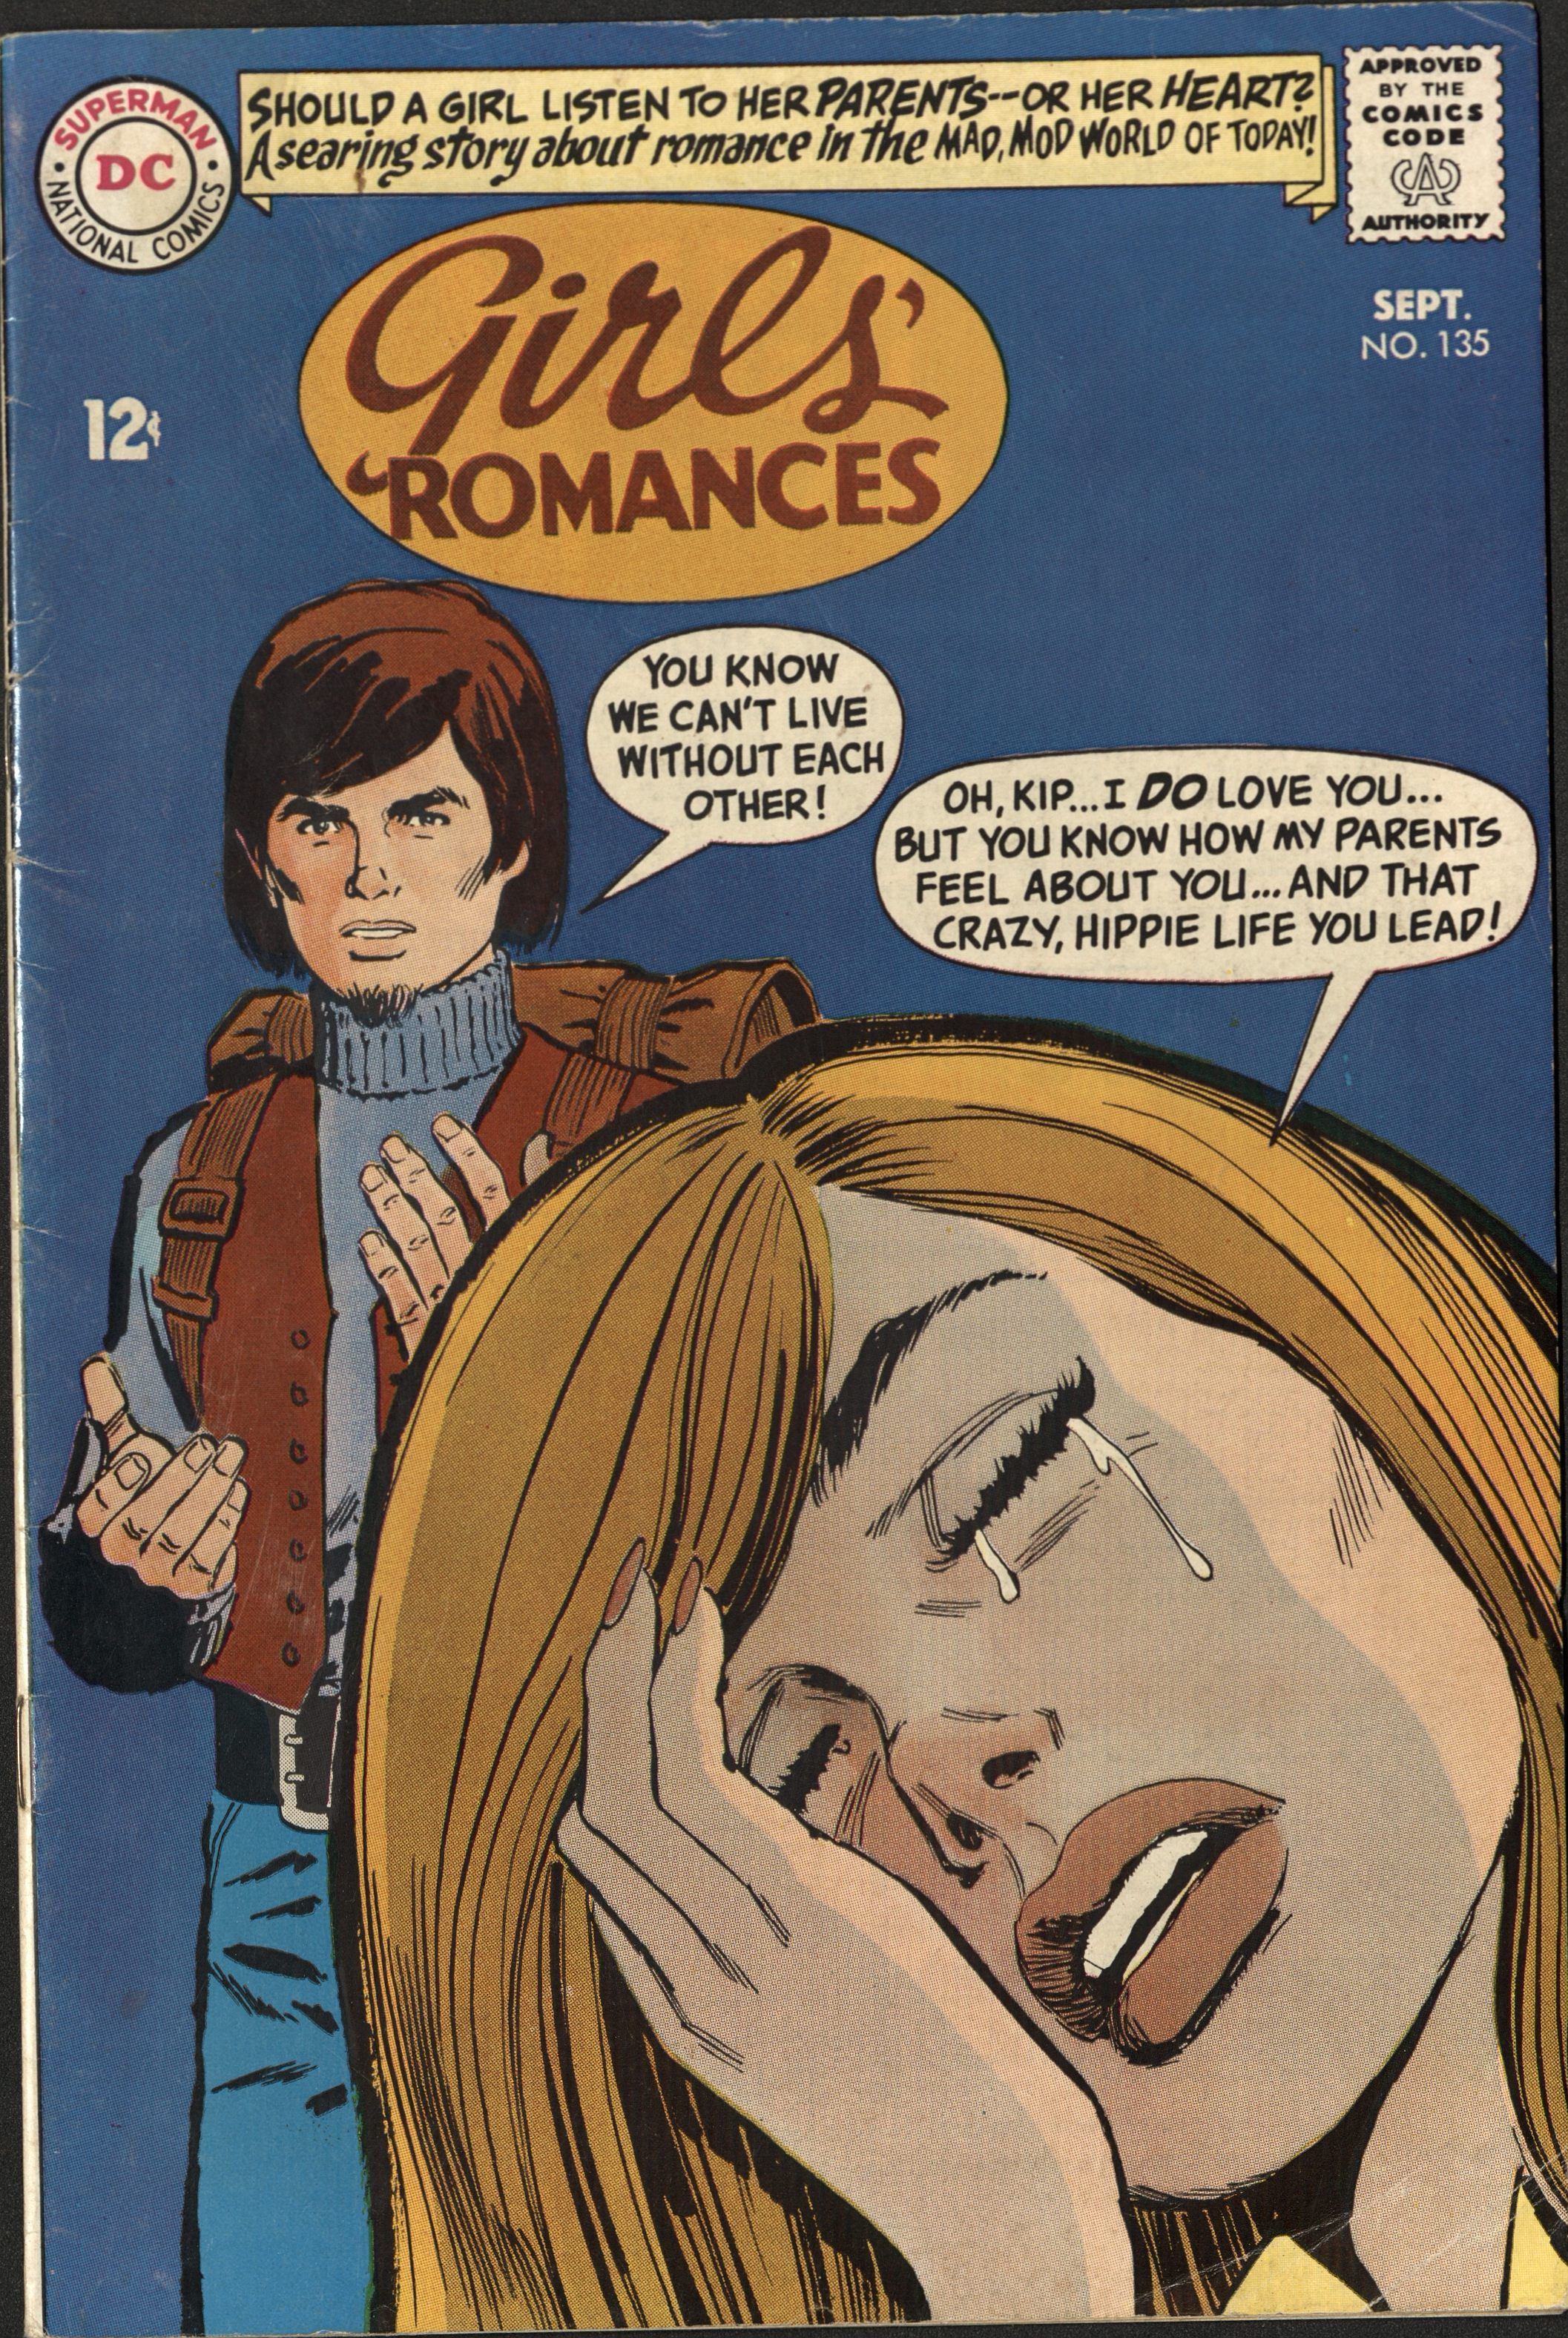 Girls Romances No 135 Dc Comics 1968 · Romancing The Comic Book · Johns Hopkins University 1929